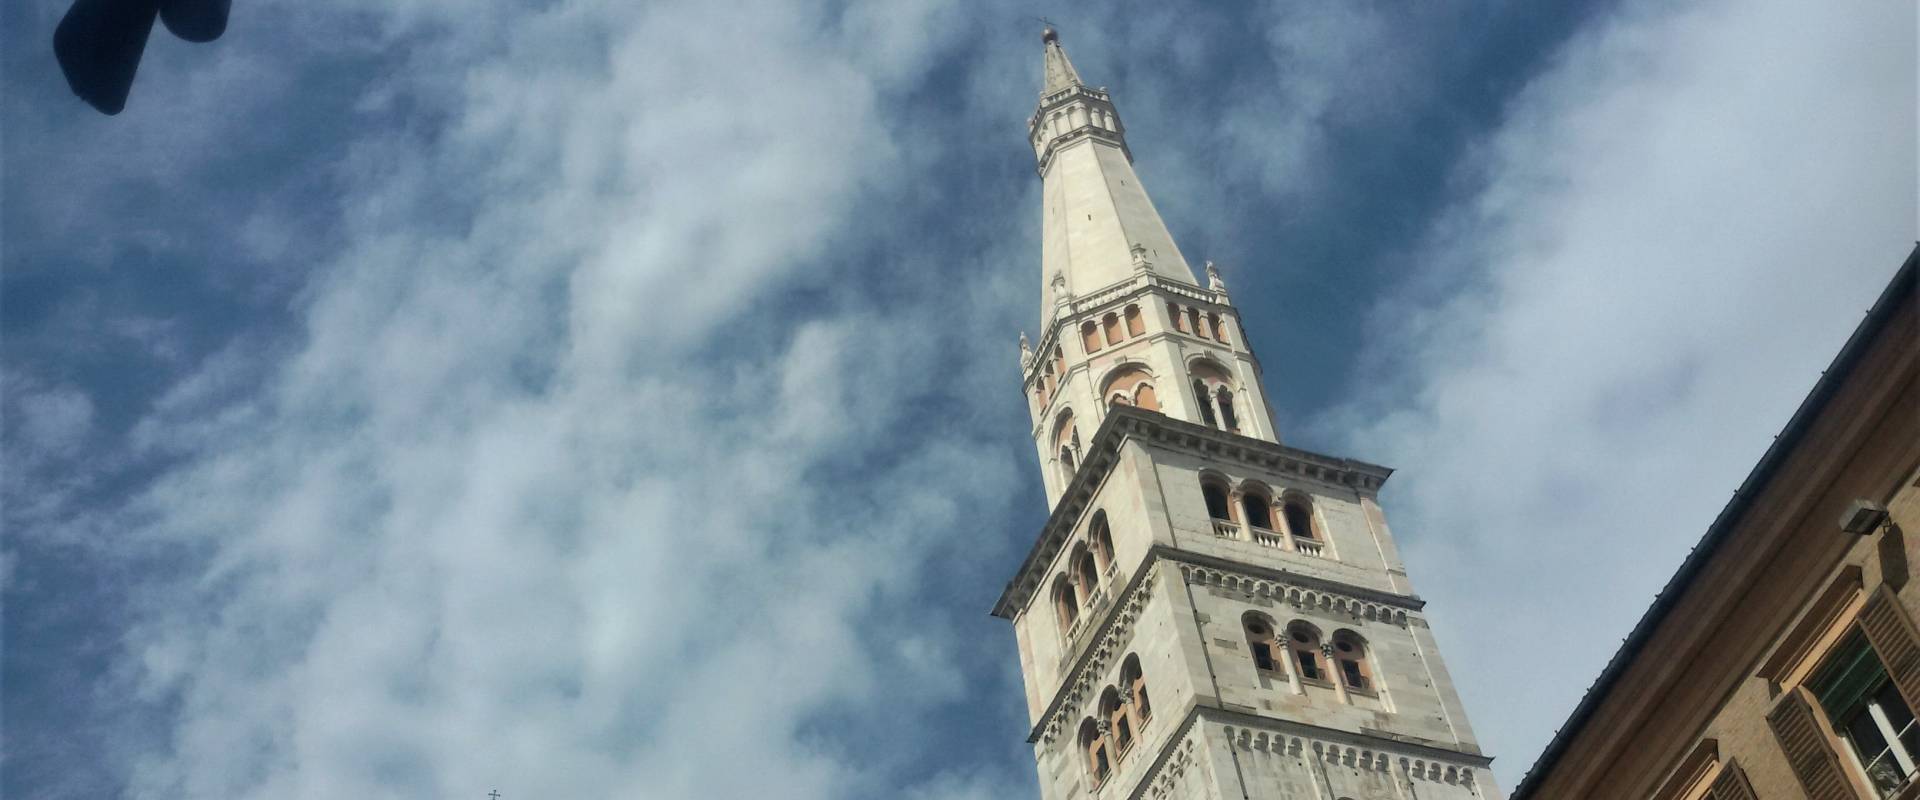 Torre della Ghirlandina - foto 14 photo by Ettorre - gregorio (ettorre(at)gmail(dot)com)